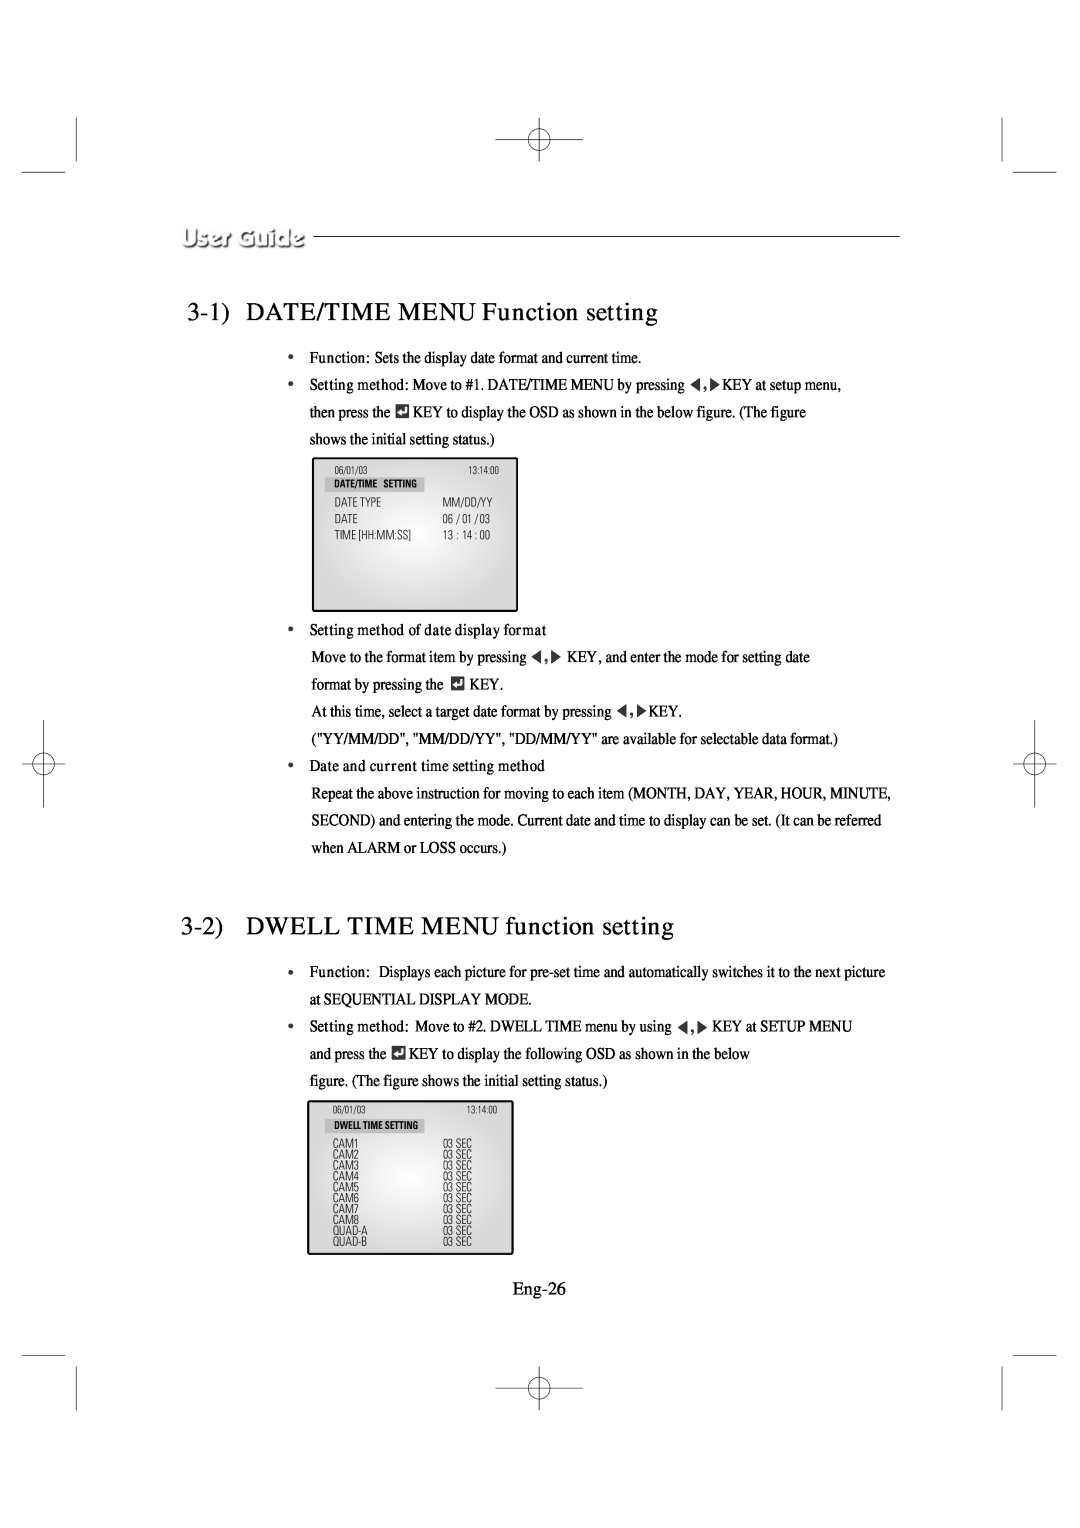 Samsung SSC17WEB manual 3-1DATE/TIME MENU Function setting, 3-2DWELL TIME MENU function setting, Eng-26 